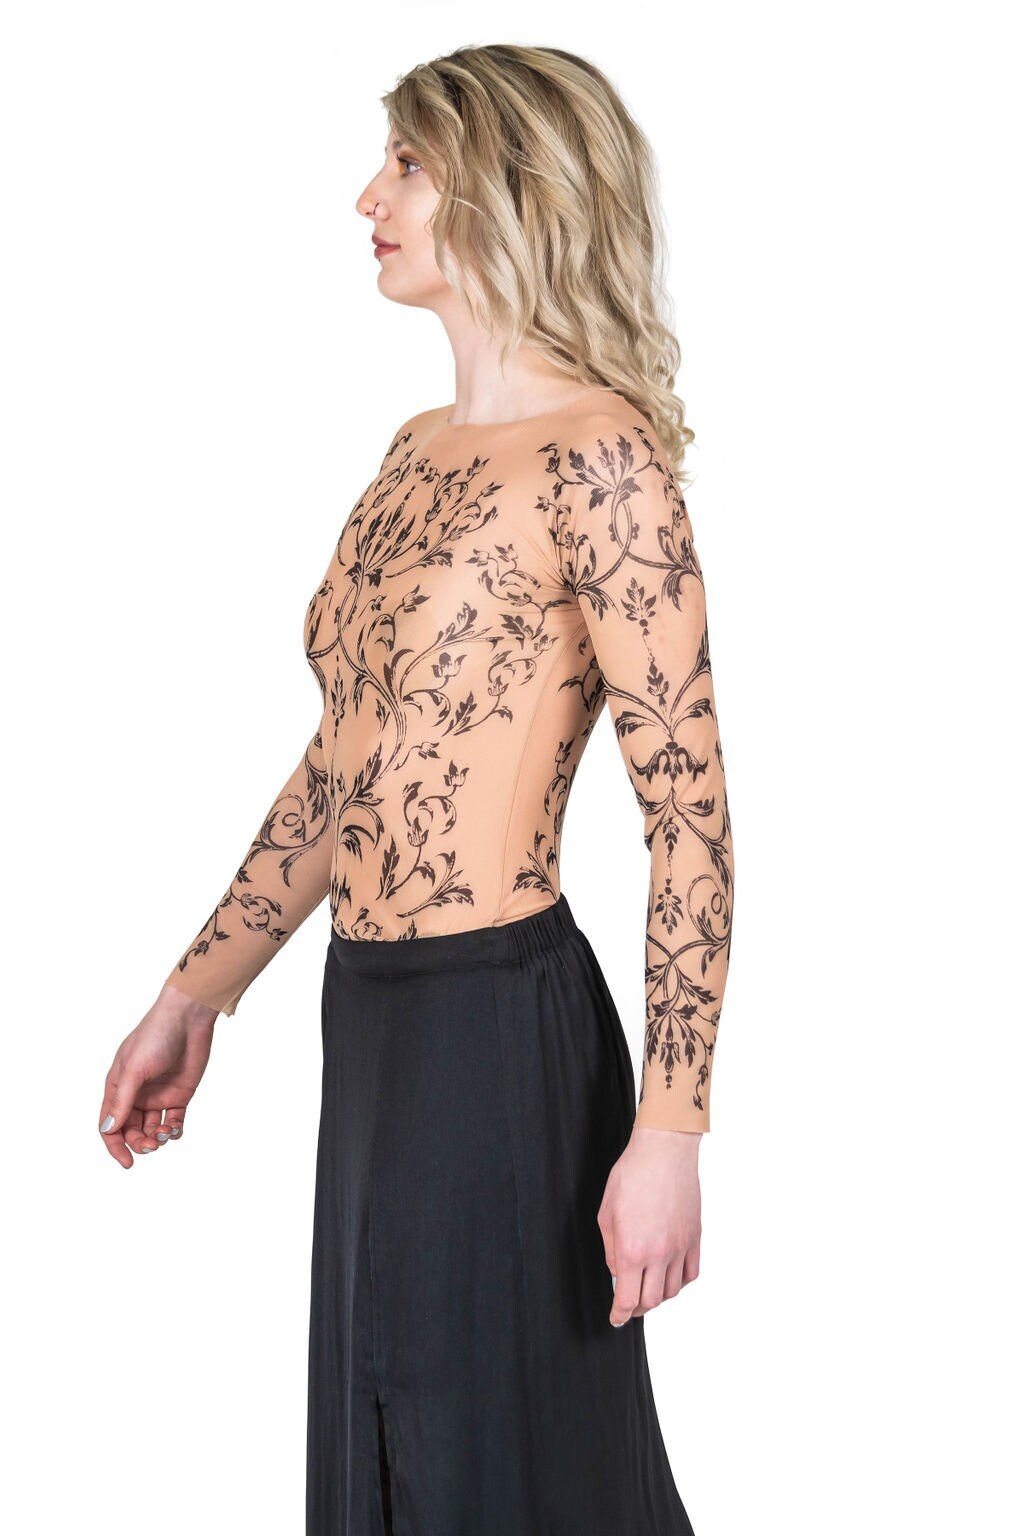 Filigree Fleur-de-Lis Lacework Mesh Tattoo Shirt